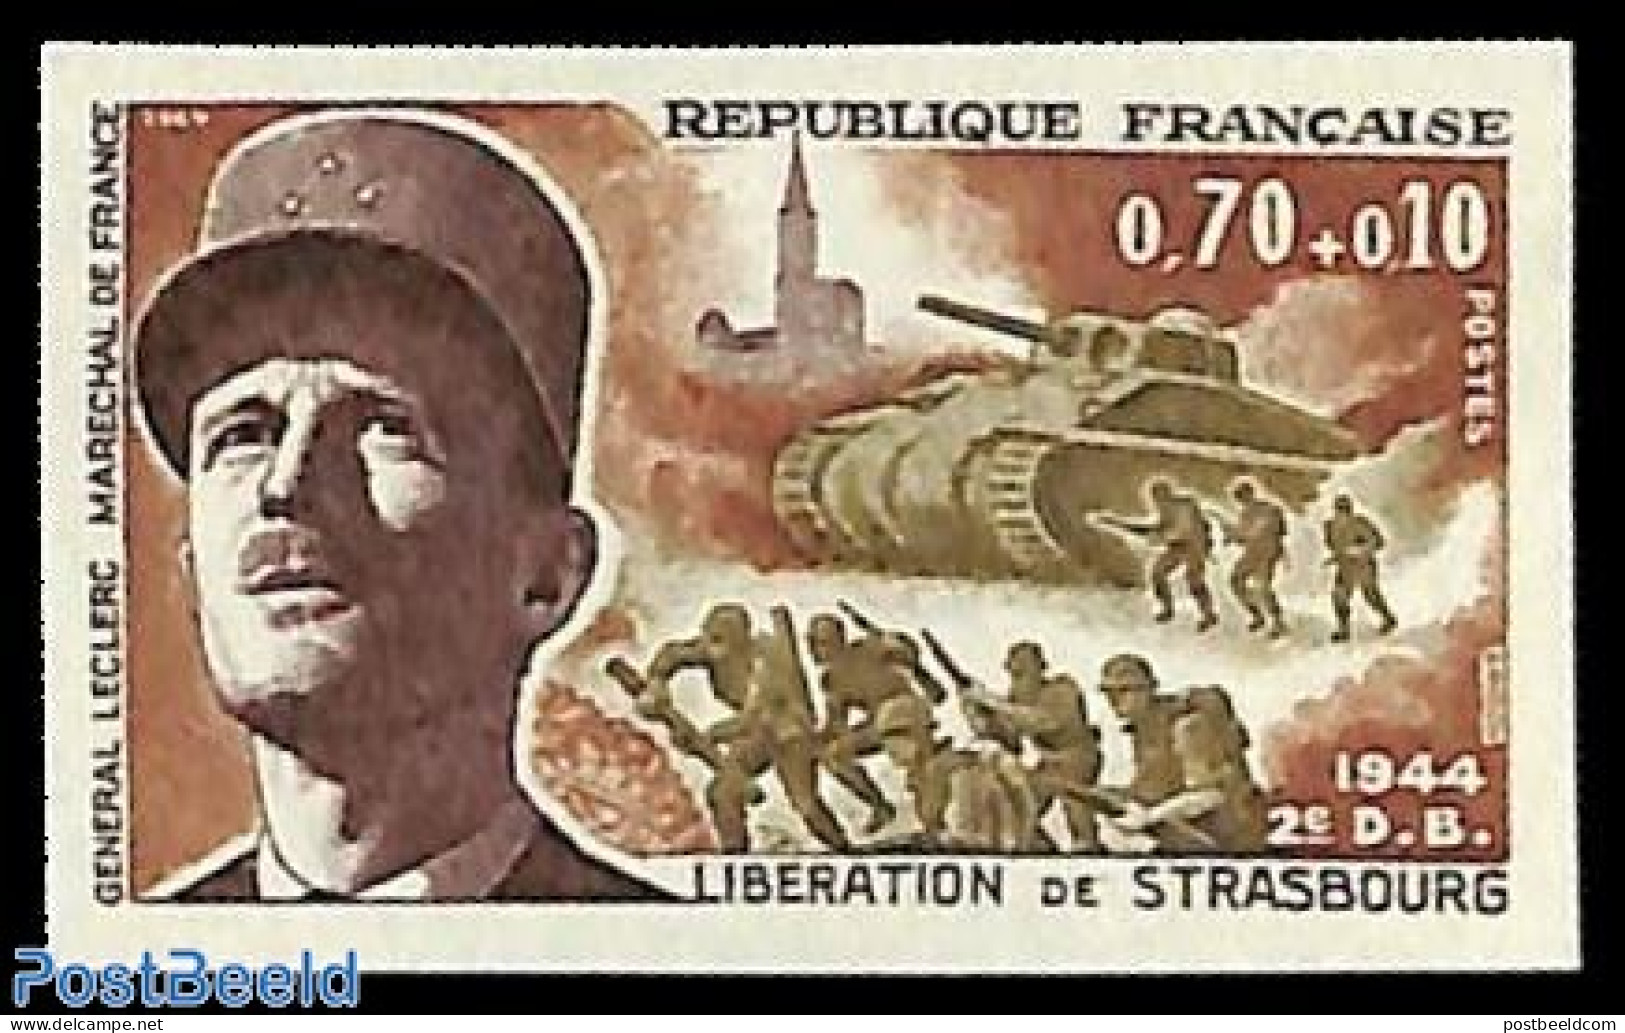 France 1969 World War I 1v, Imperforated, Mint NH, History - World War II - Unused Stamps